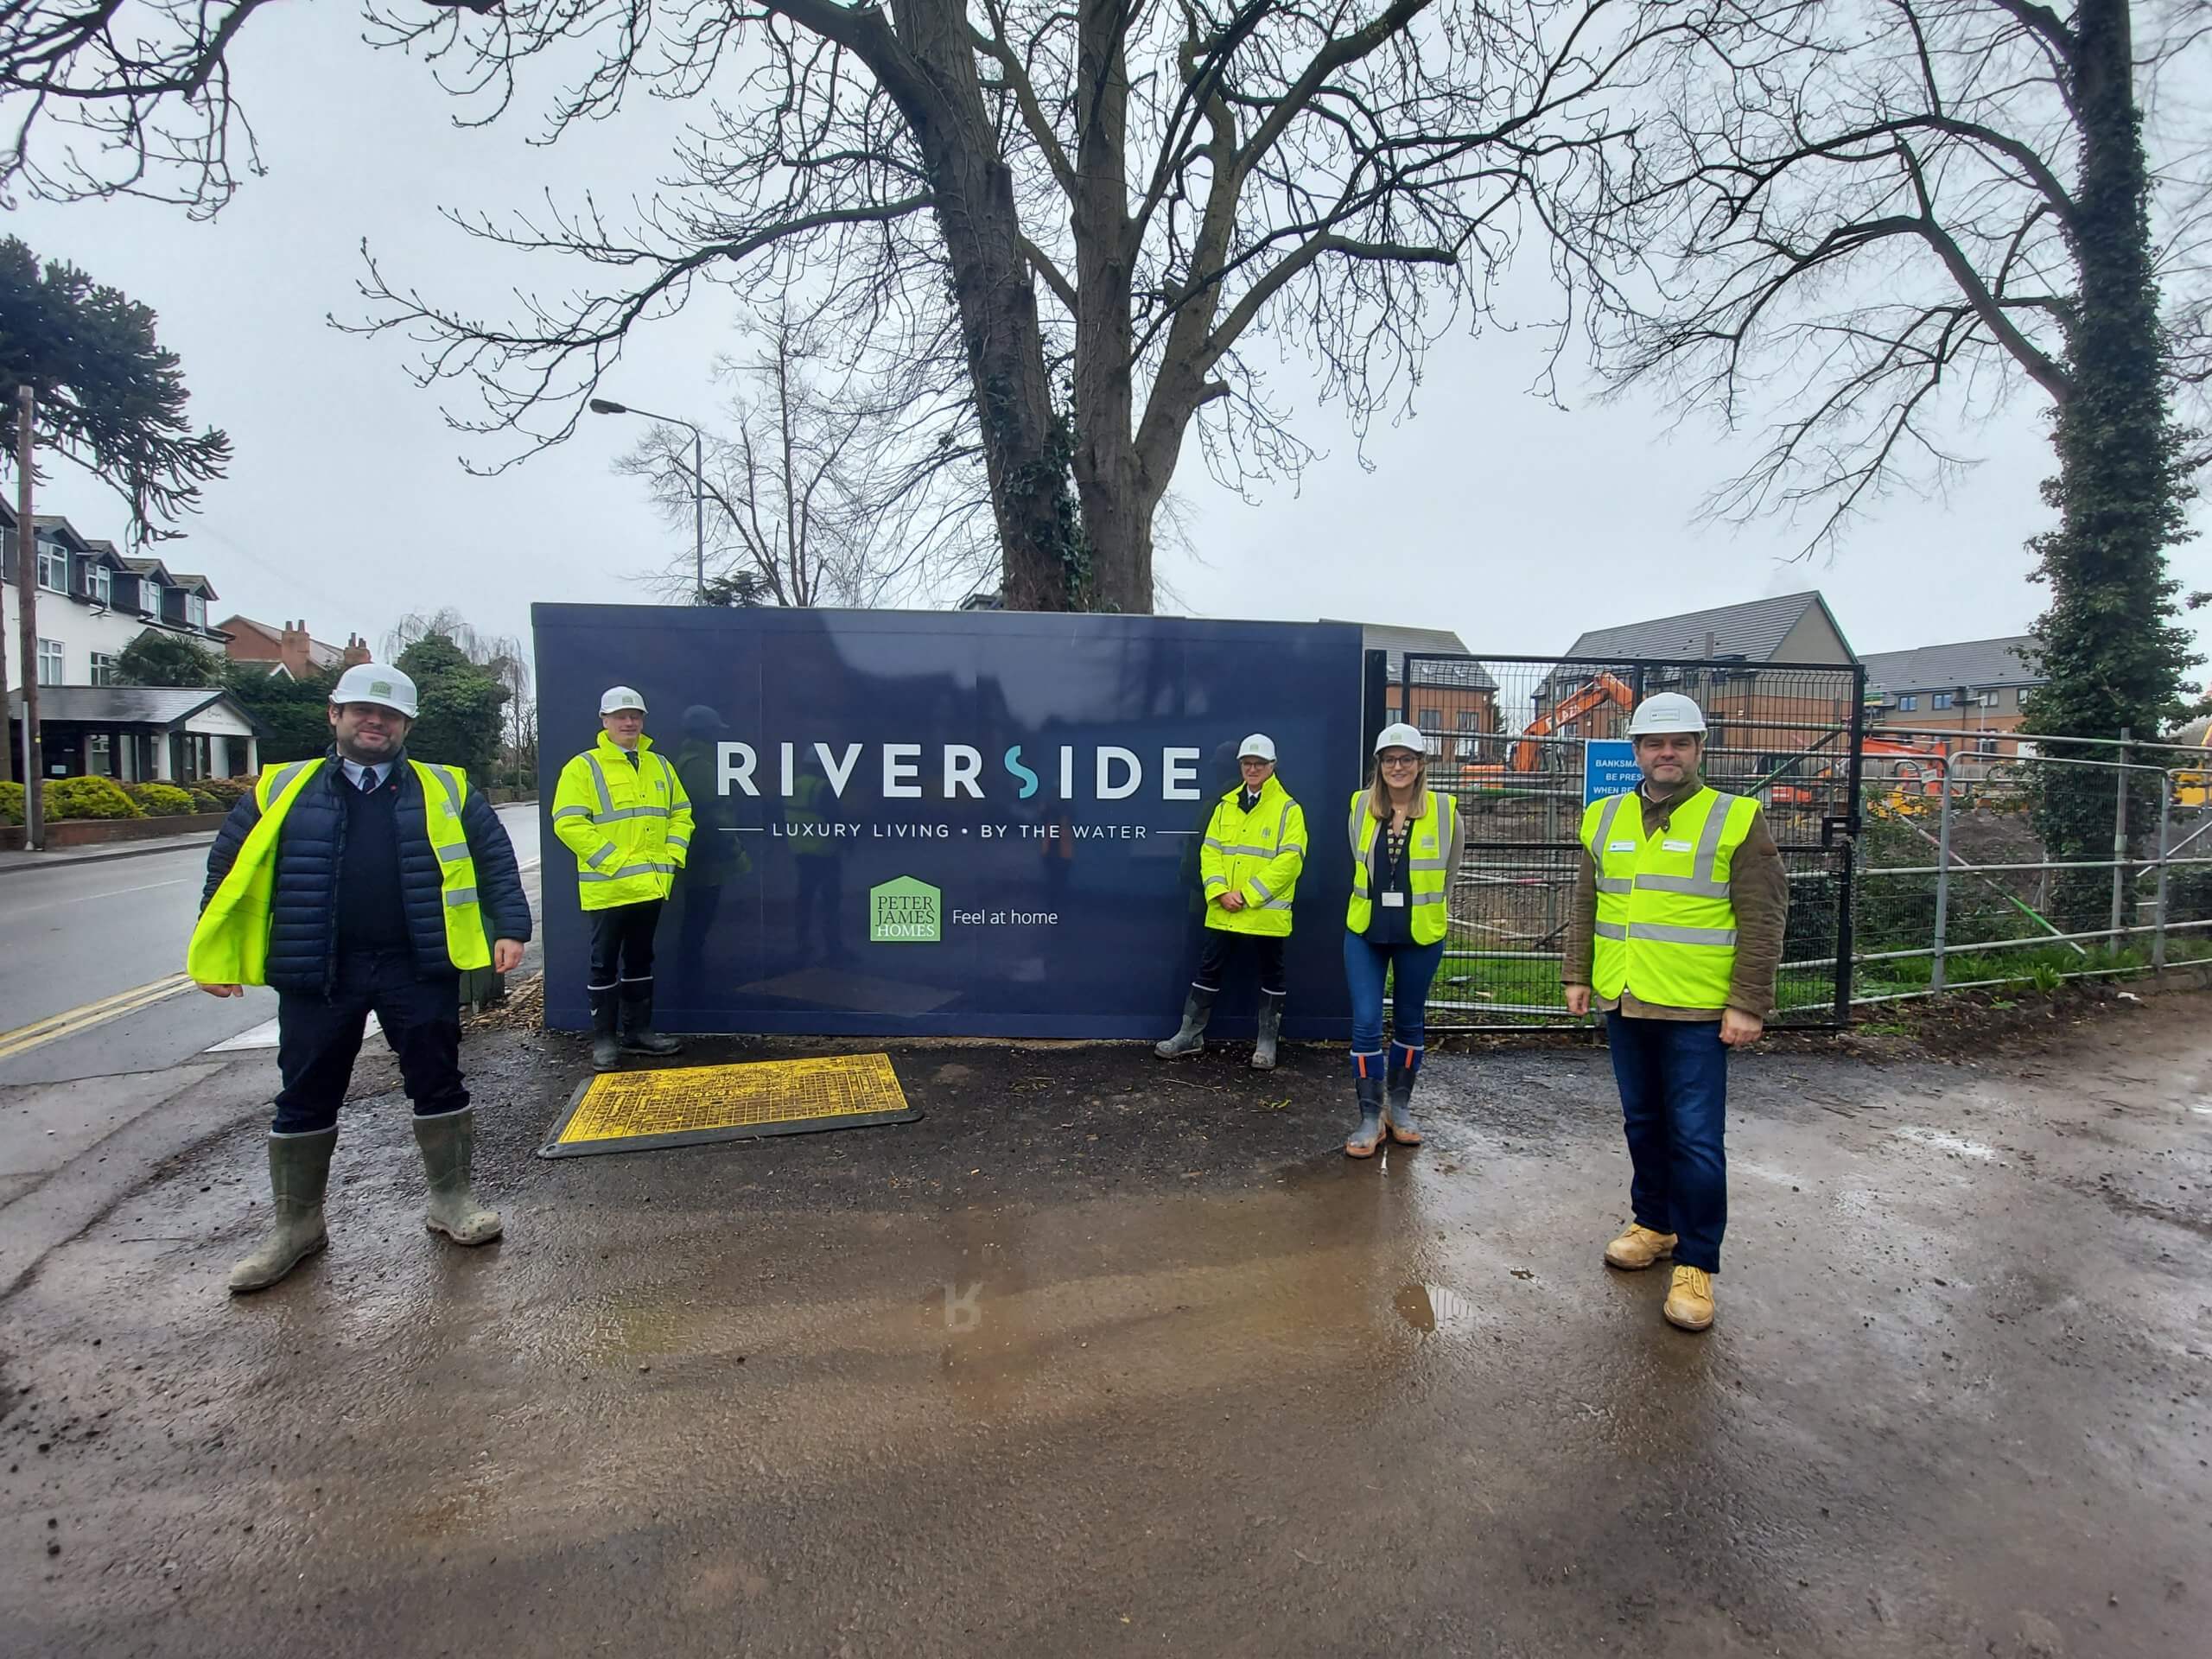 The Riverside development in West Bridgford